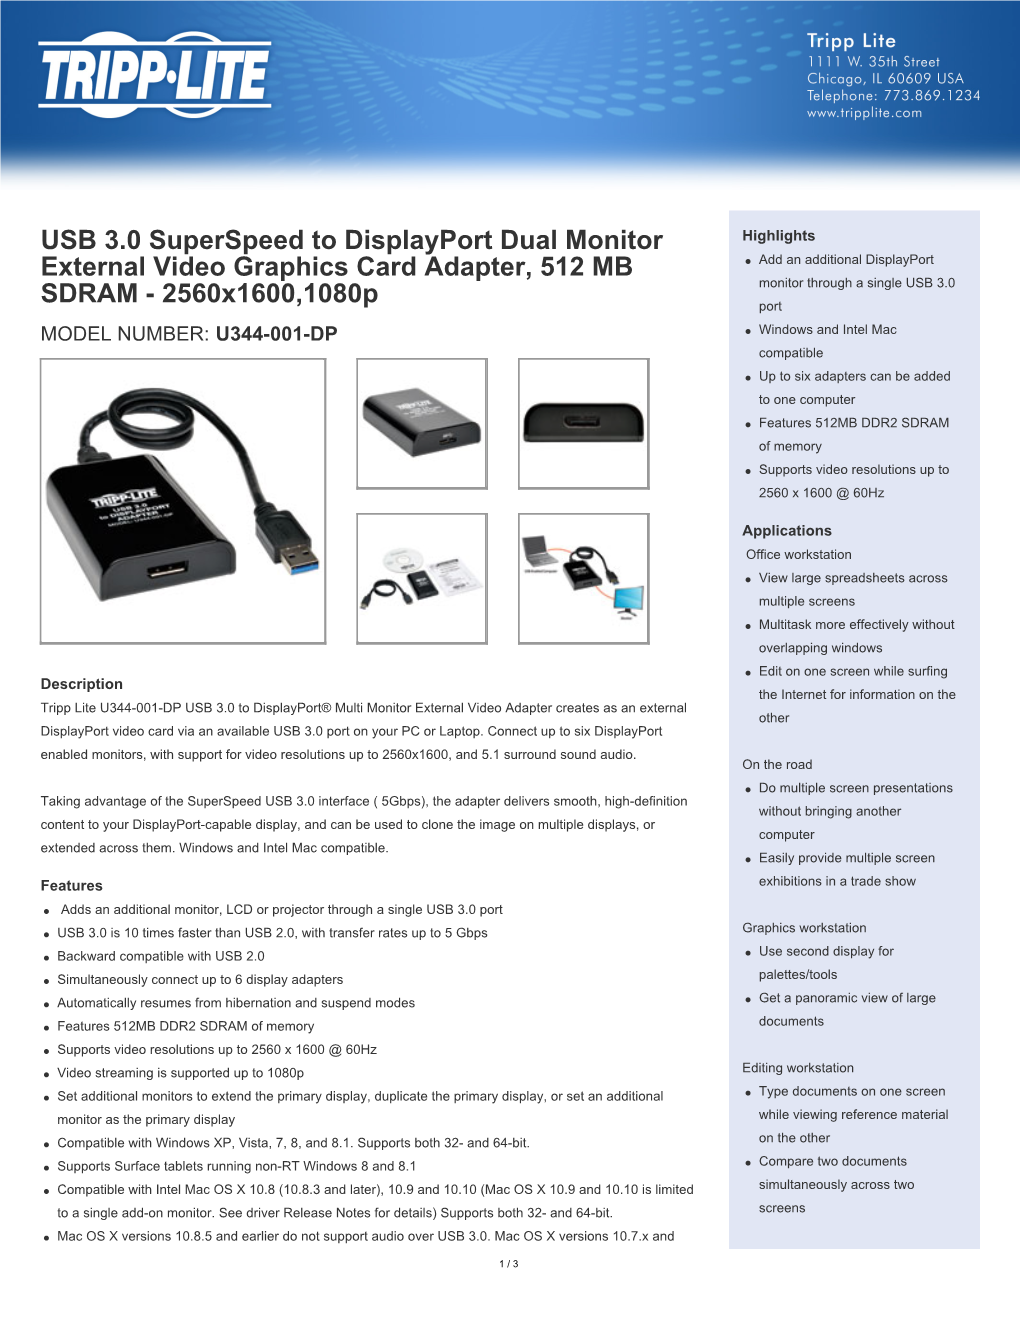 USB 3.0 Superspeed to Displayport Dual Monitor External Video